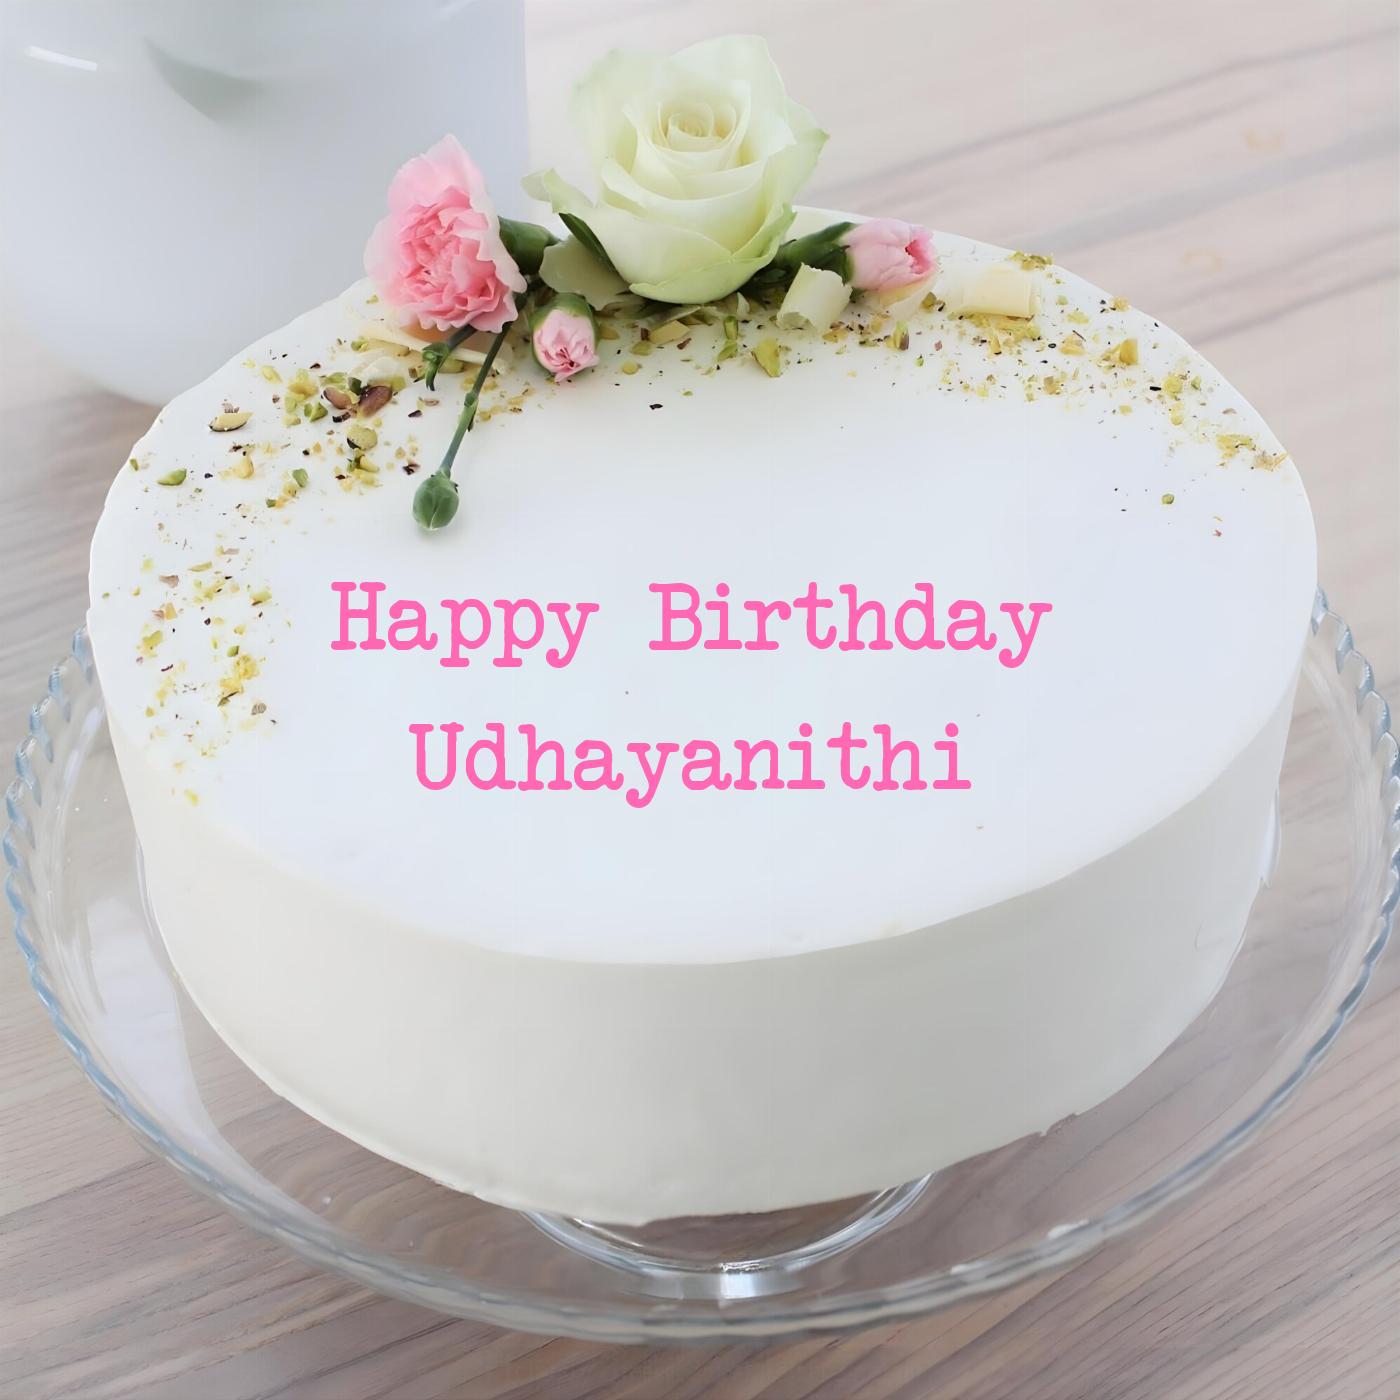 Happy Birthday Udhayanithi White Pink Roses Cake